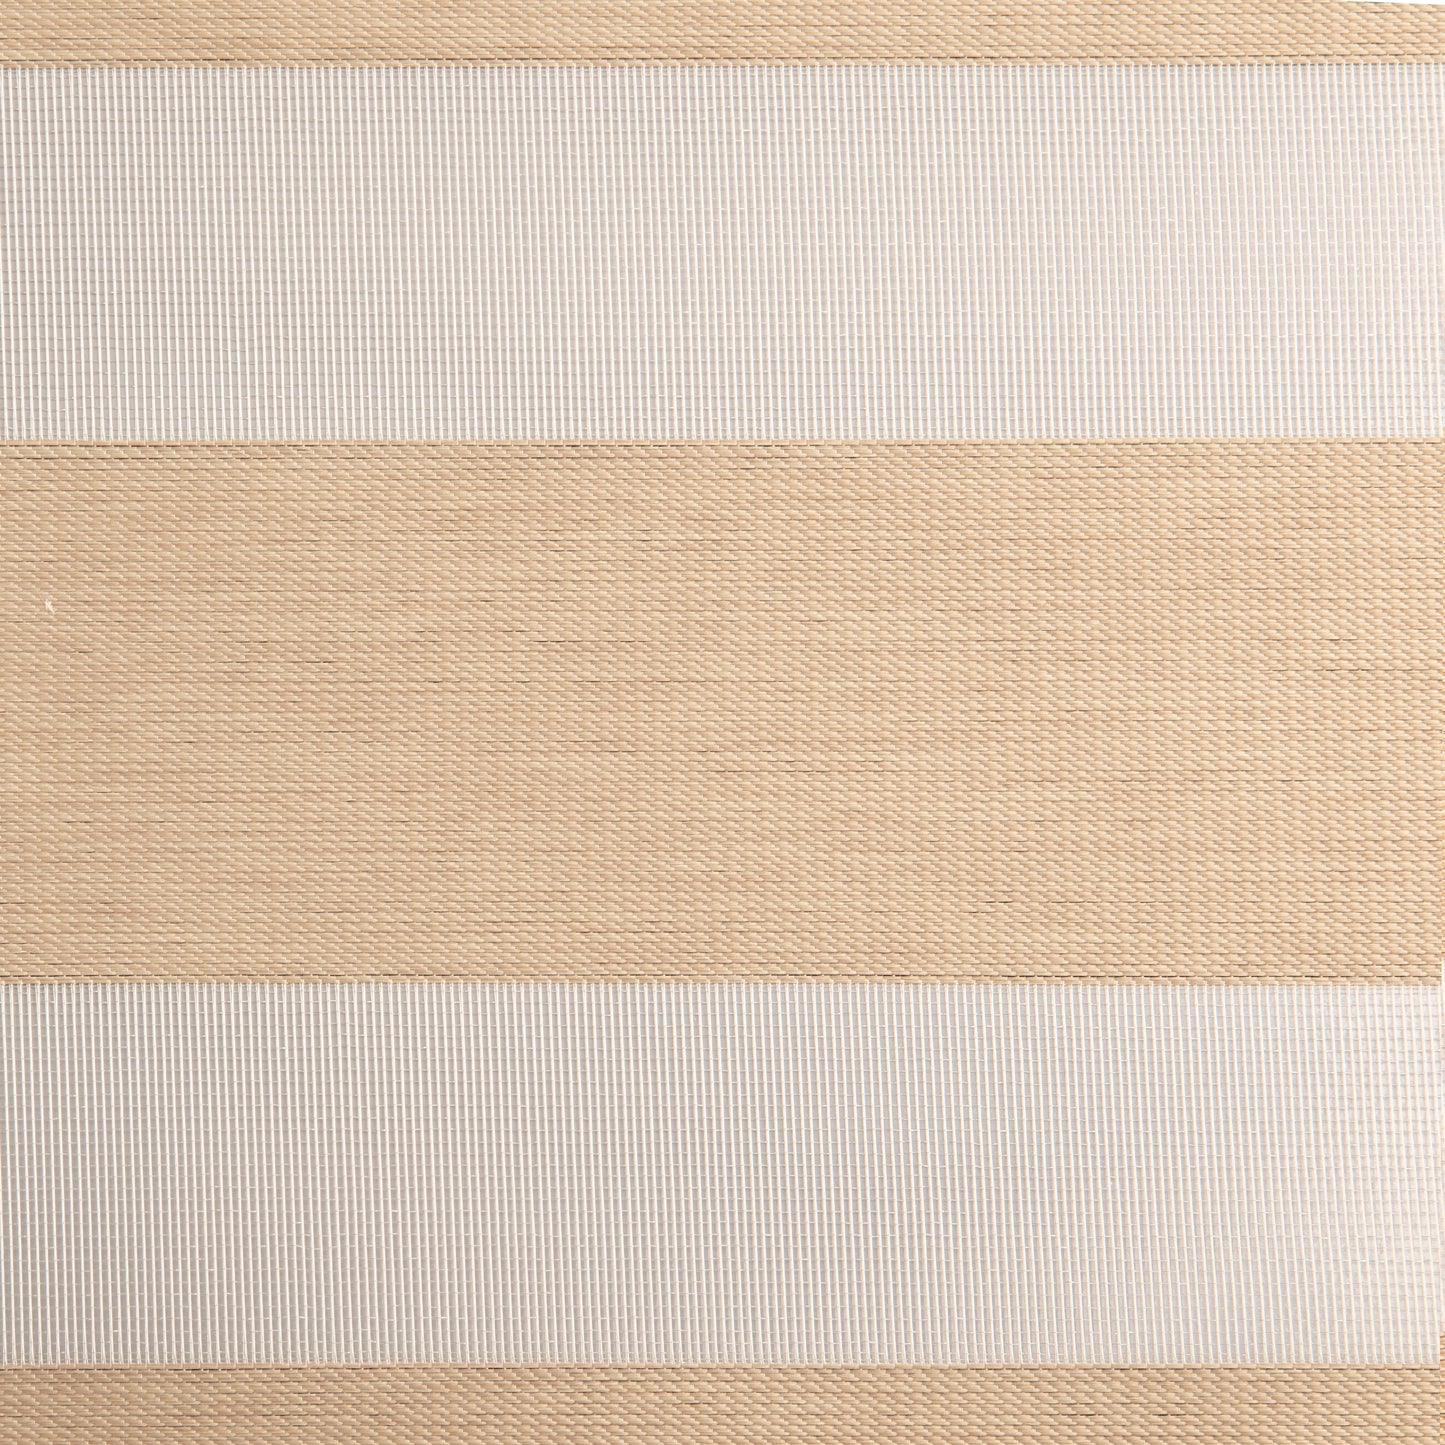 Golden decoristra custom blinds